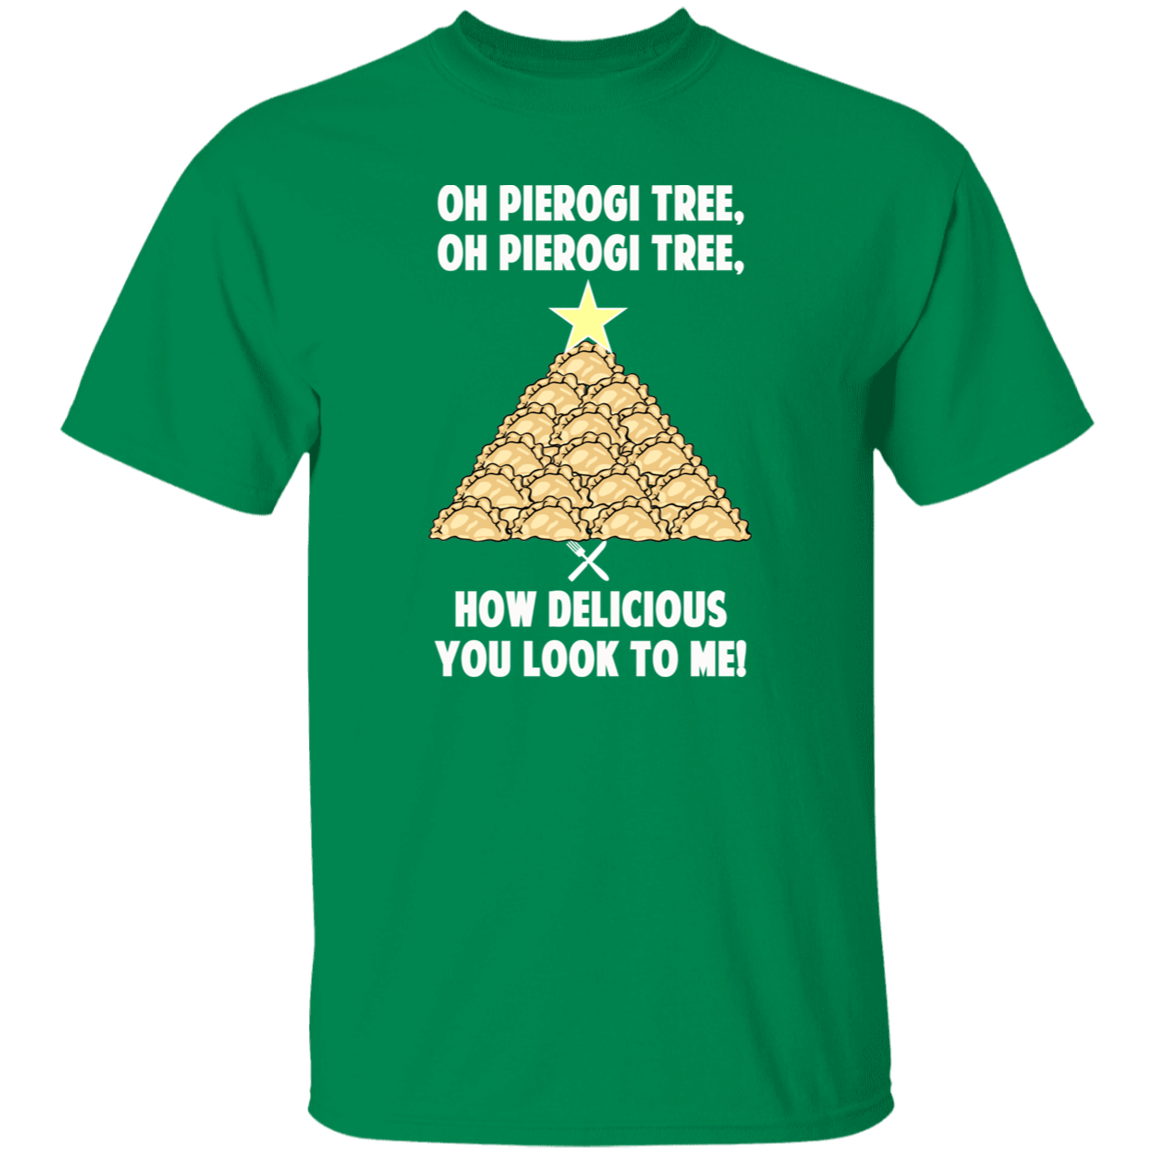 Pierogi Tree T-Shirt - The Original T-Shirts CustomCat Turf Green S 